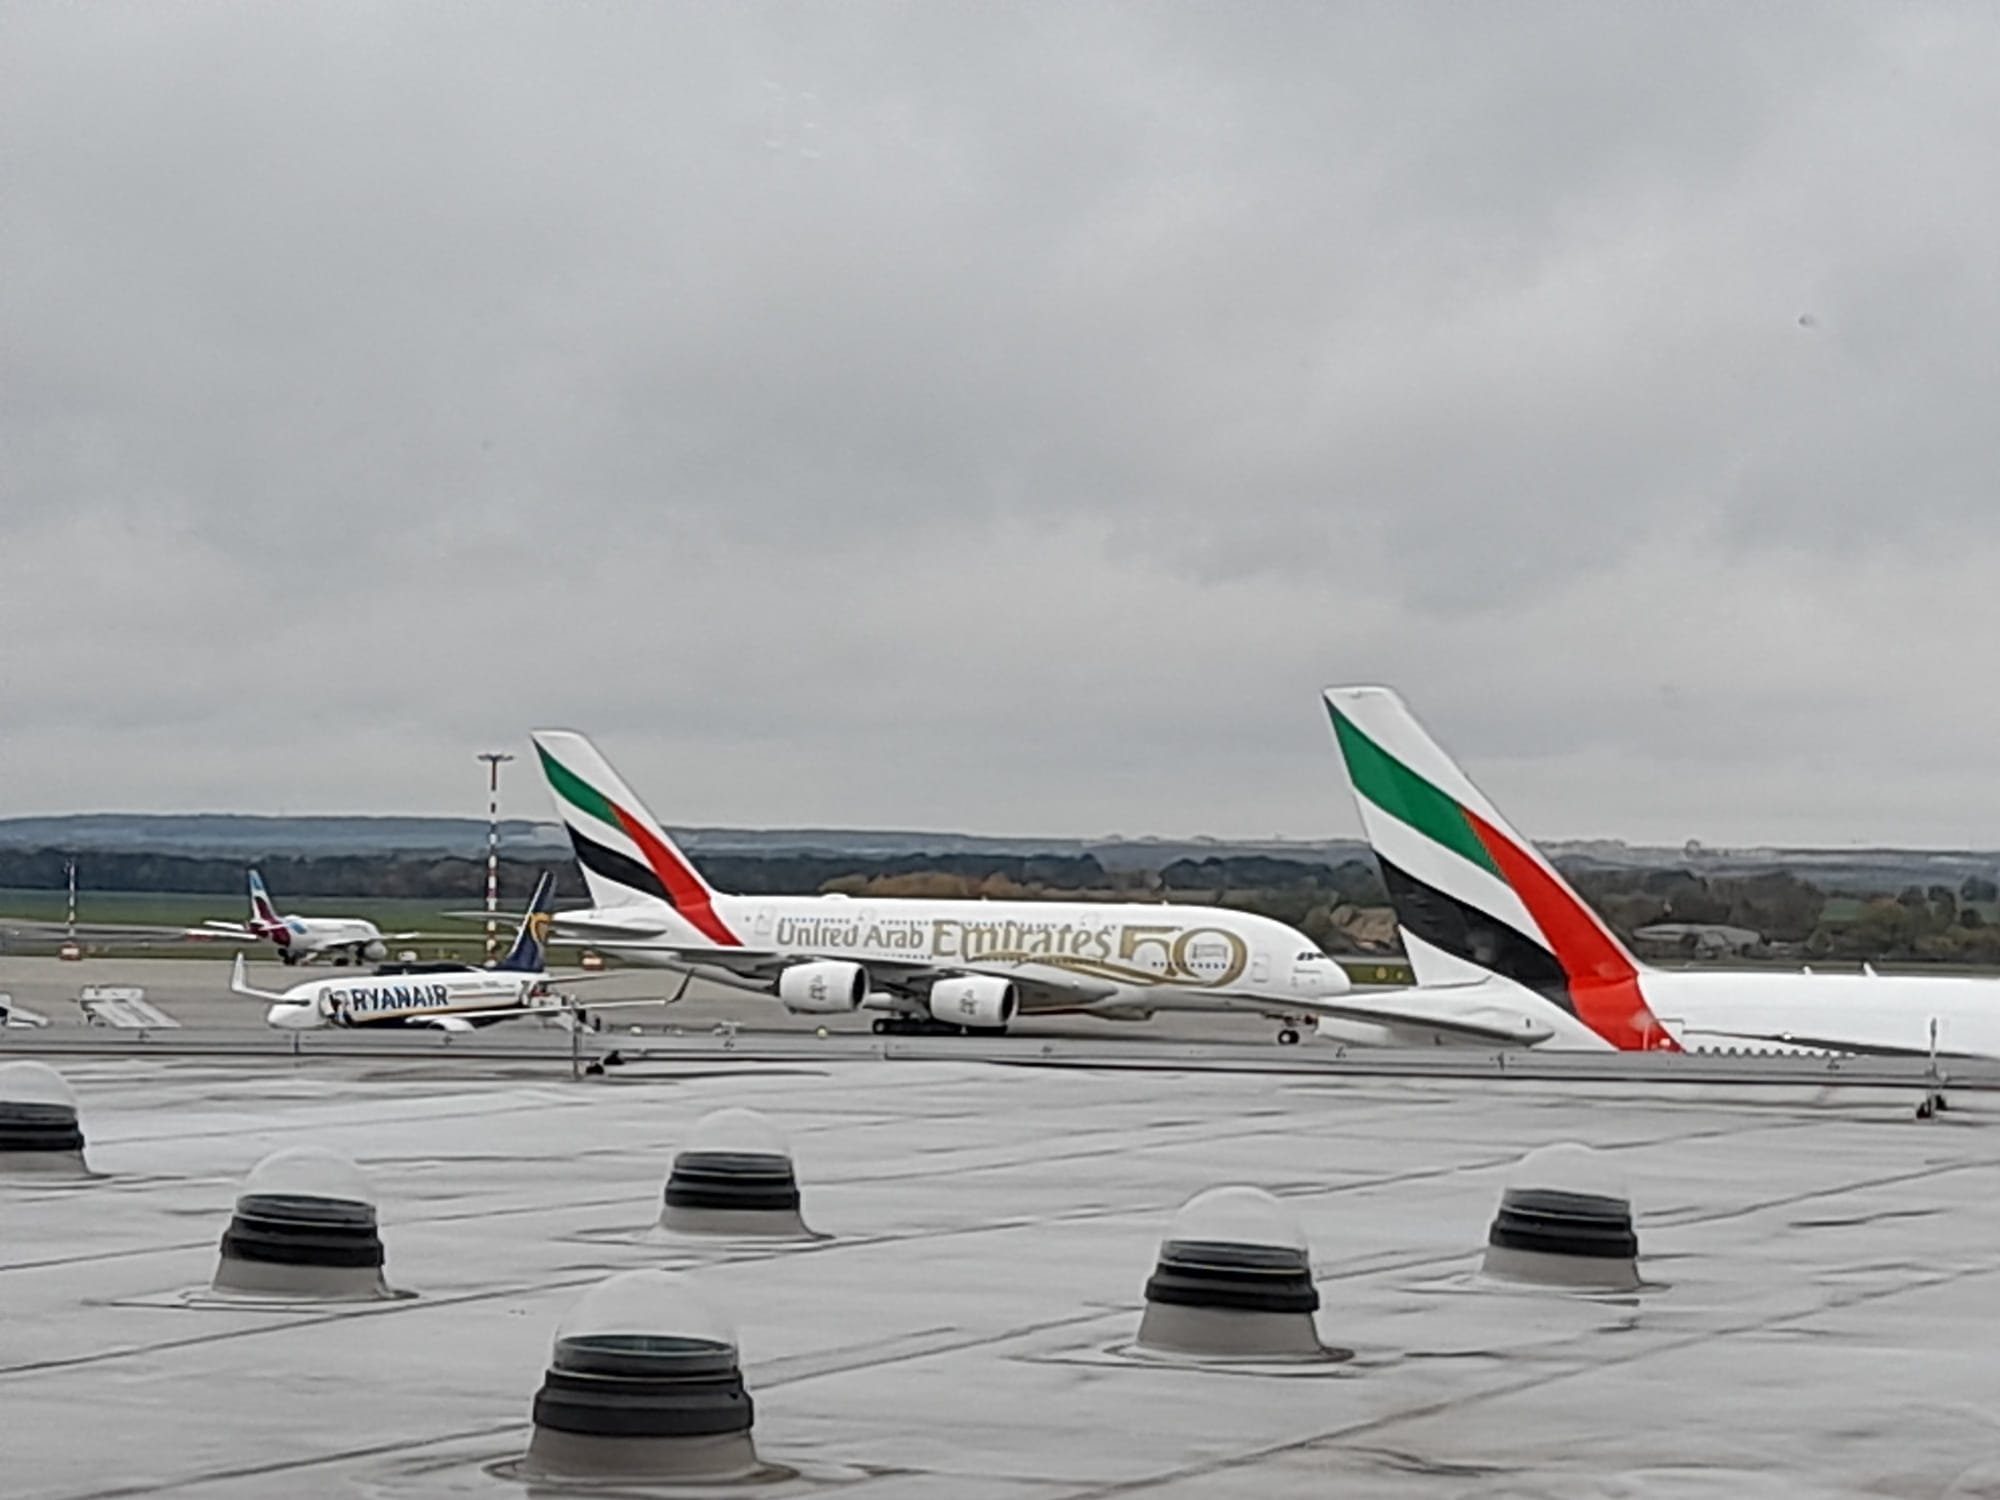 Letoun A380 po divertu do Prahy. Foto: Vlastimil Kučera